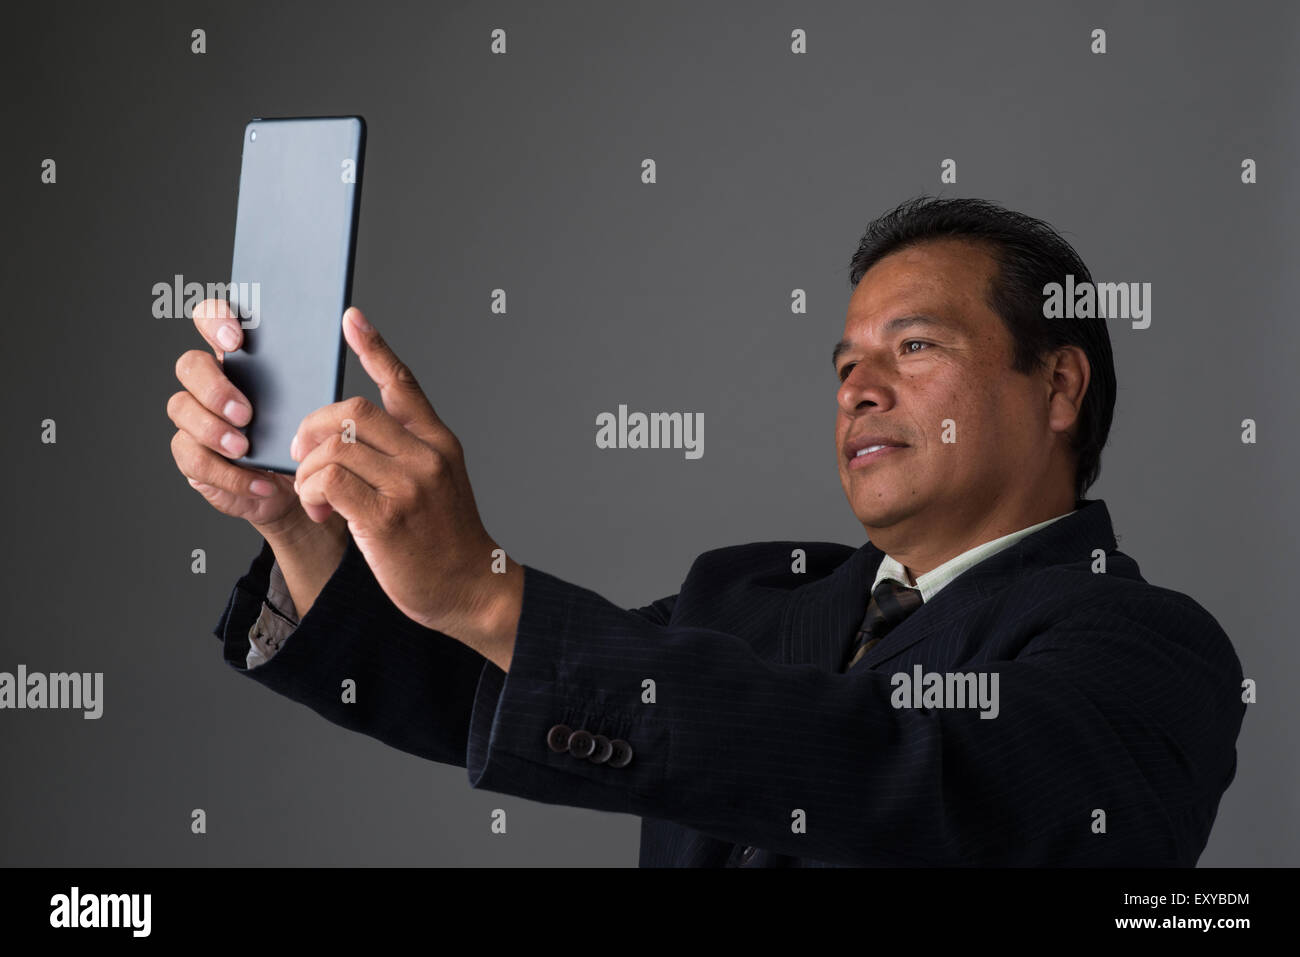 Ein Hispanic Geschäftsmann hält ein Mini-Ipad oder Tablet, wobei ein Selbstporträt. Stockfoto